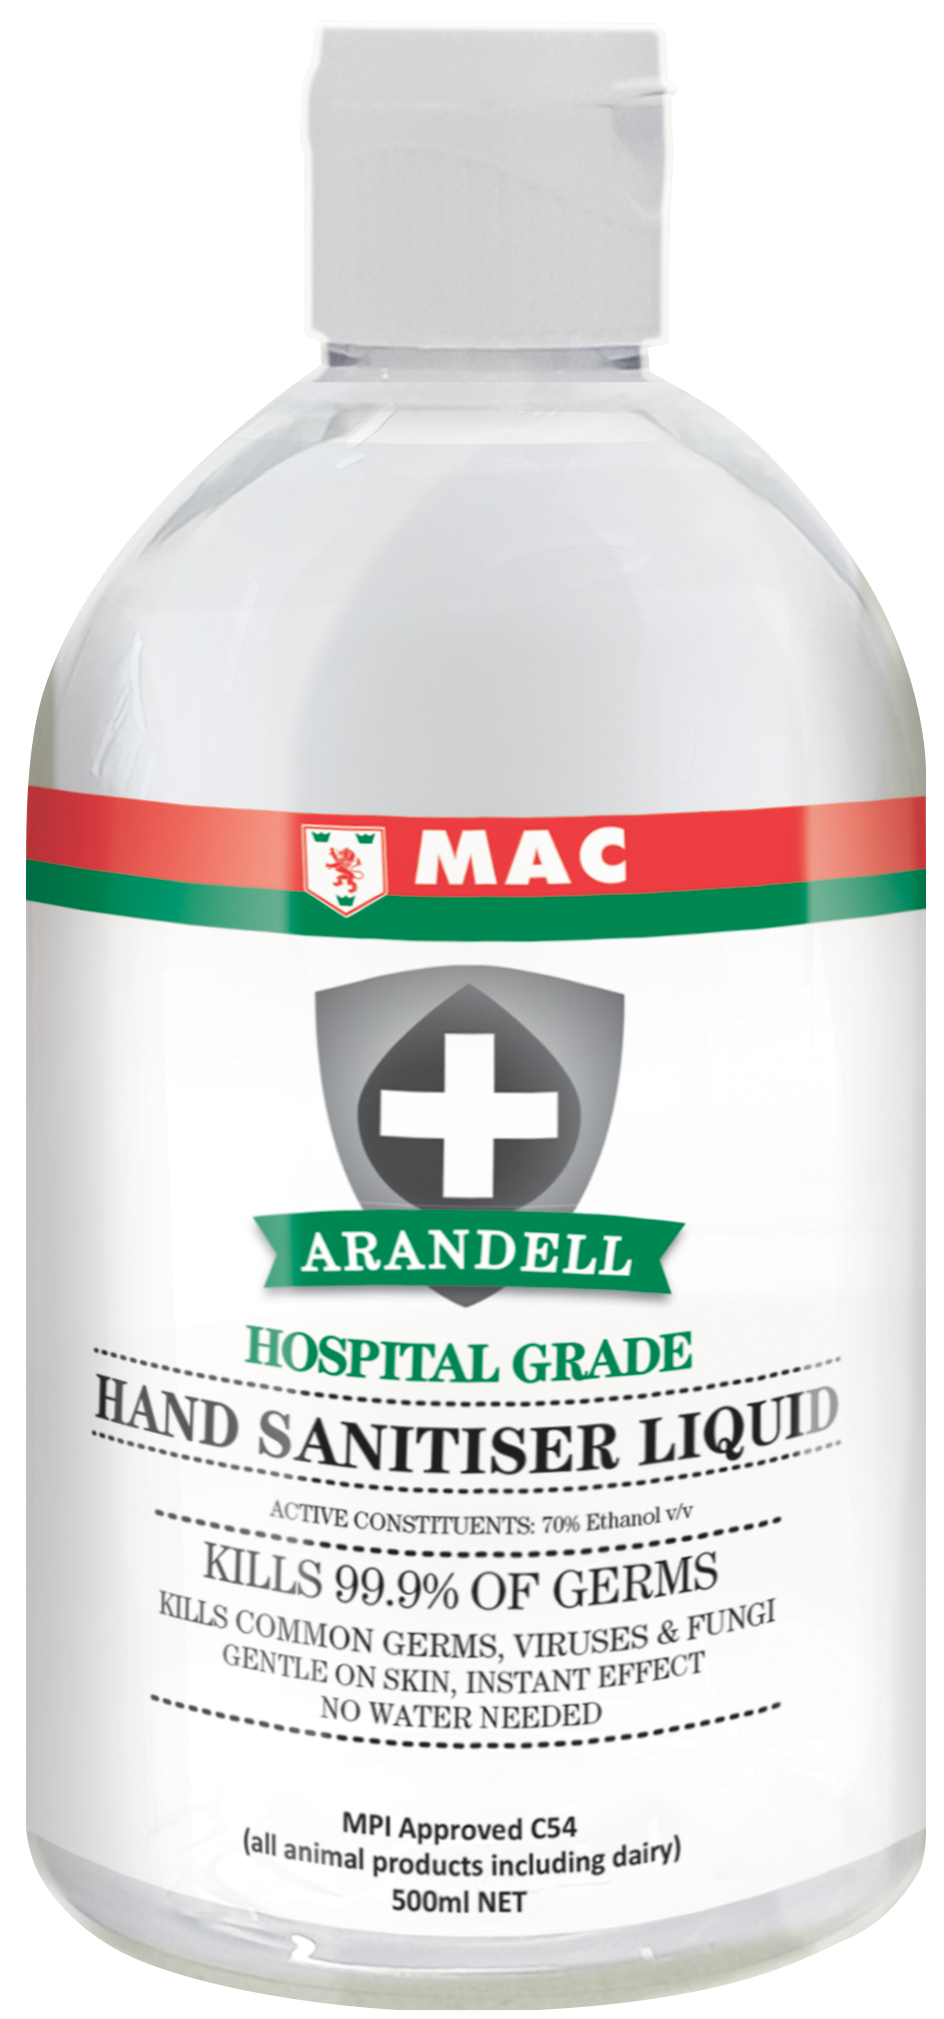 ZERO Contact Liquid Sanitiser per bottle 500ml